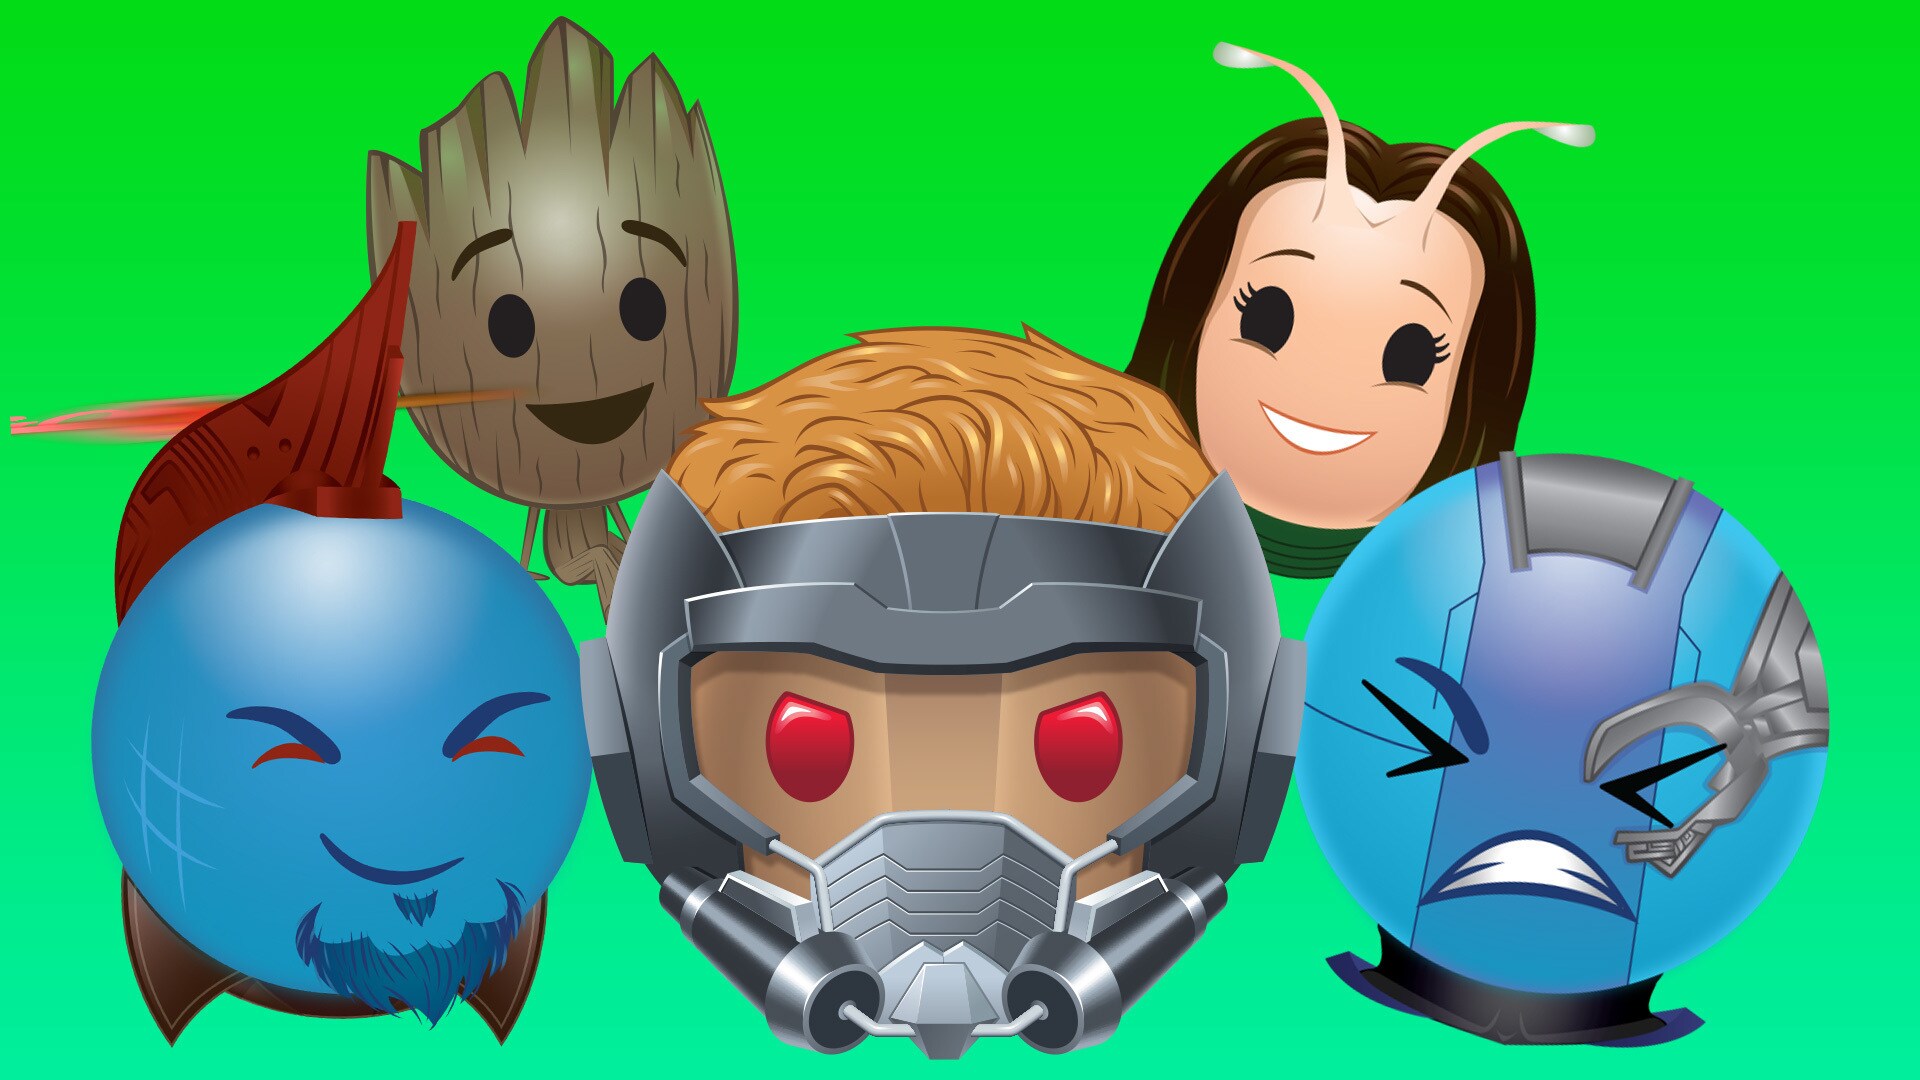 Guardians of the Galaxy Vol. 2 | Disney As Told By Emoji